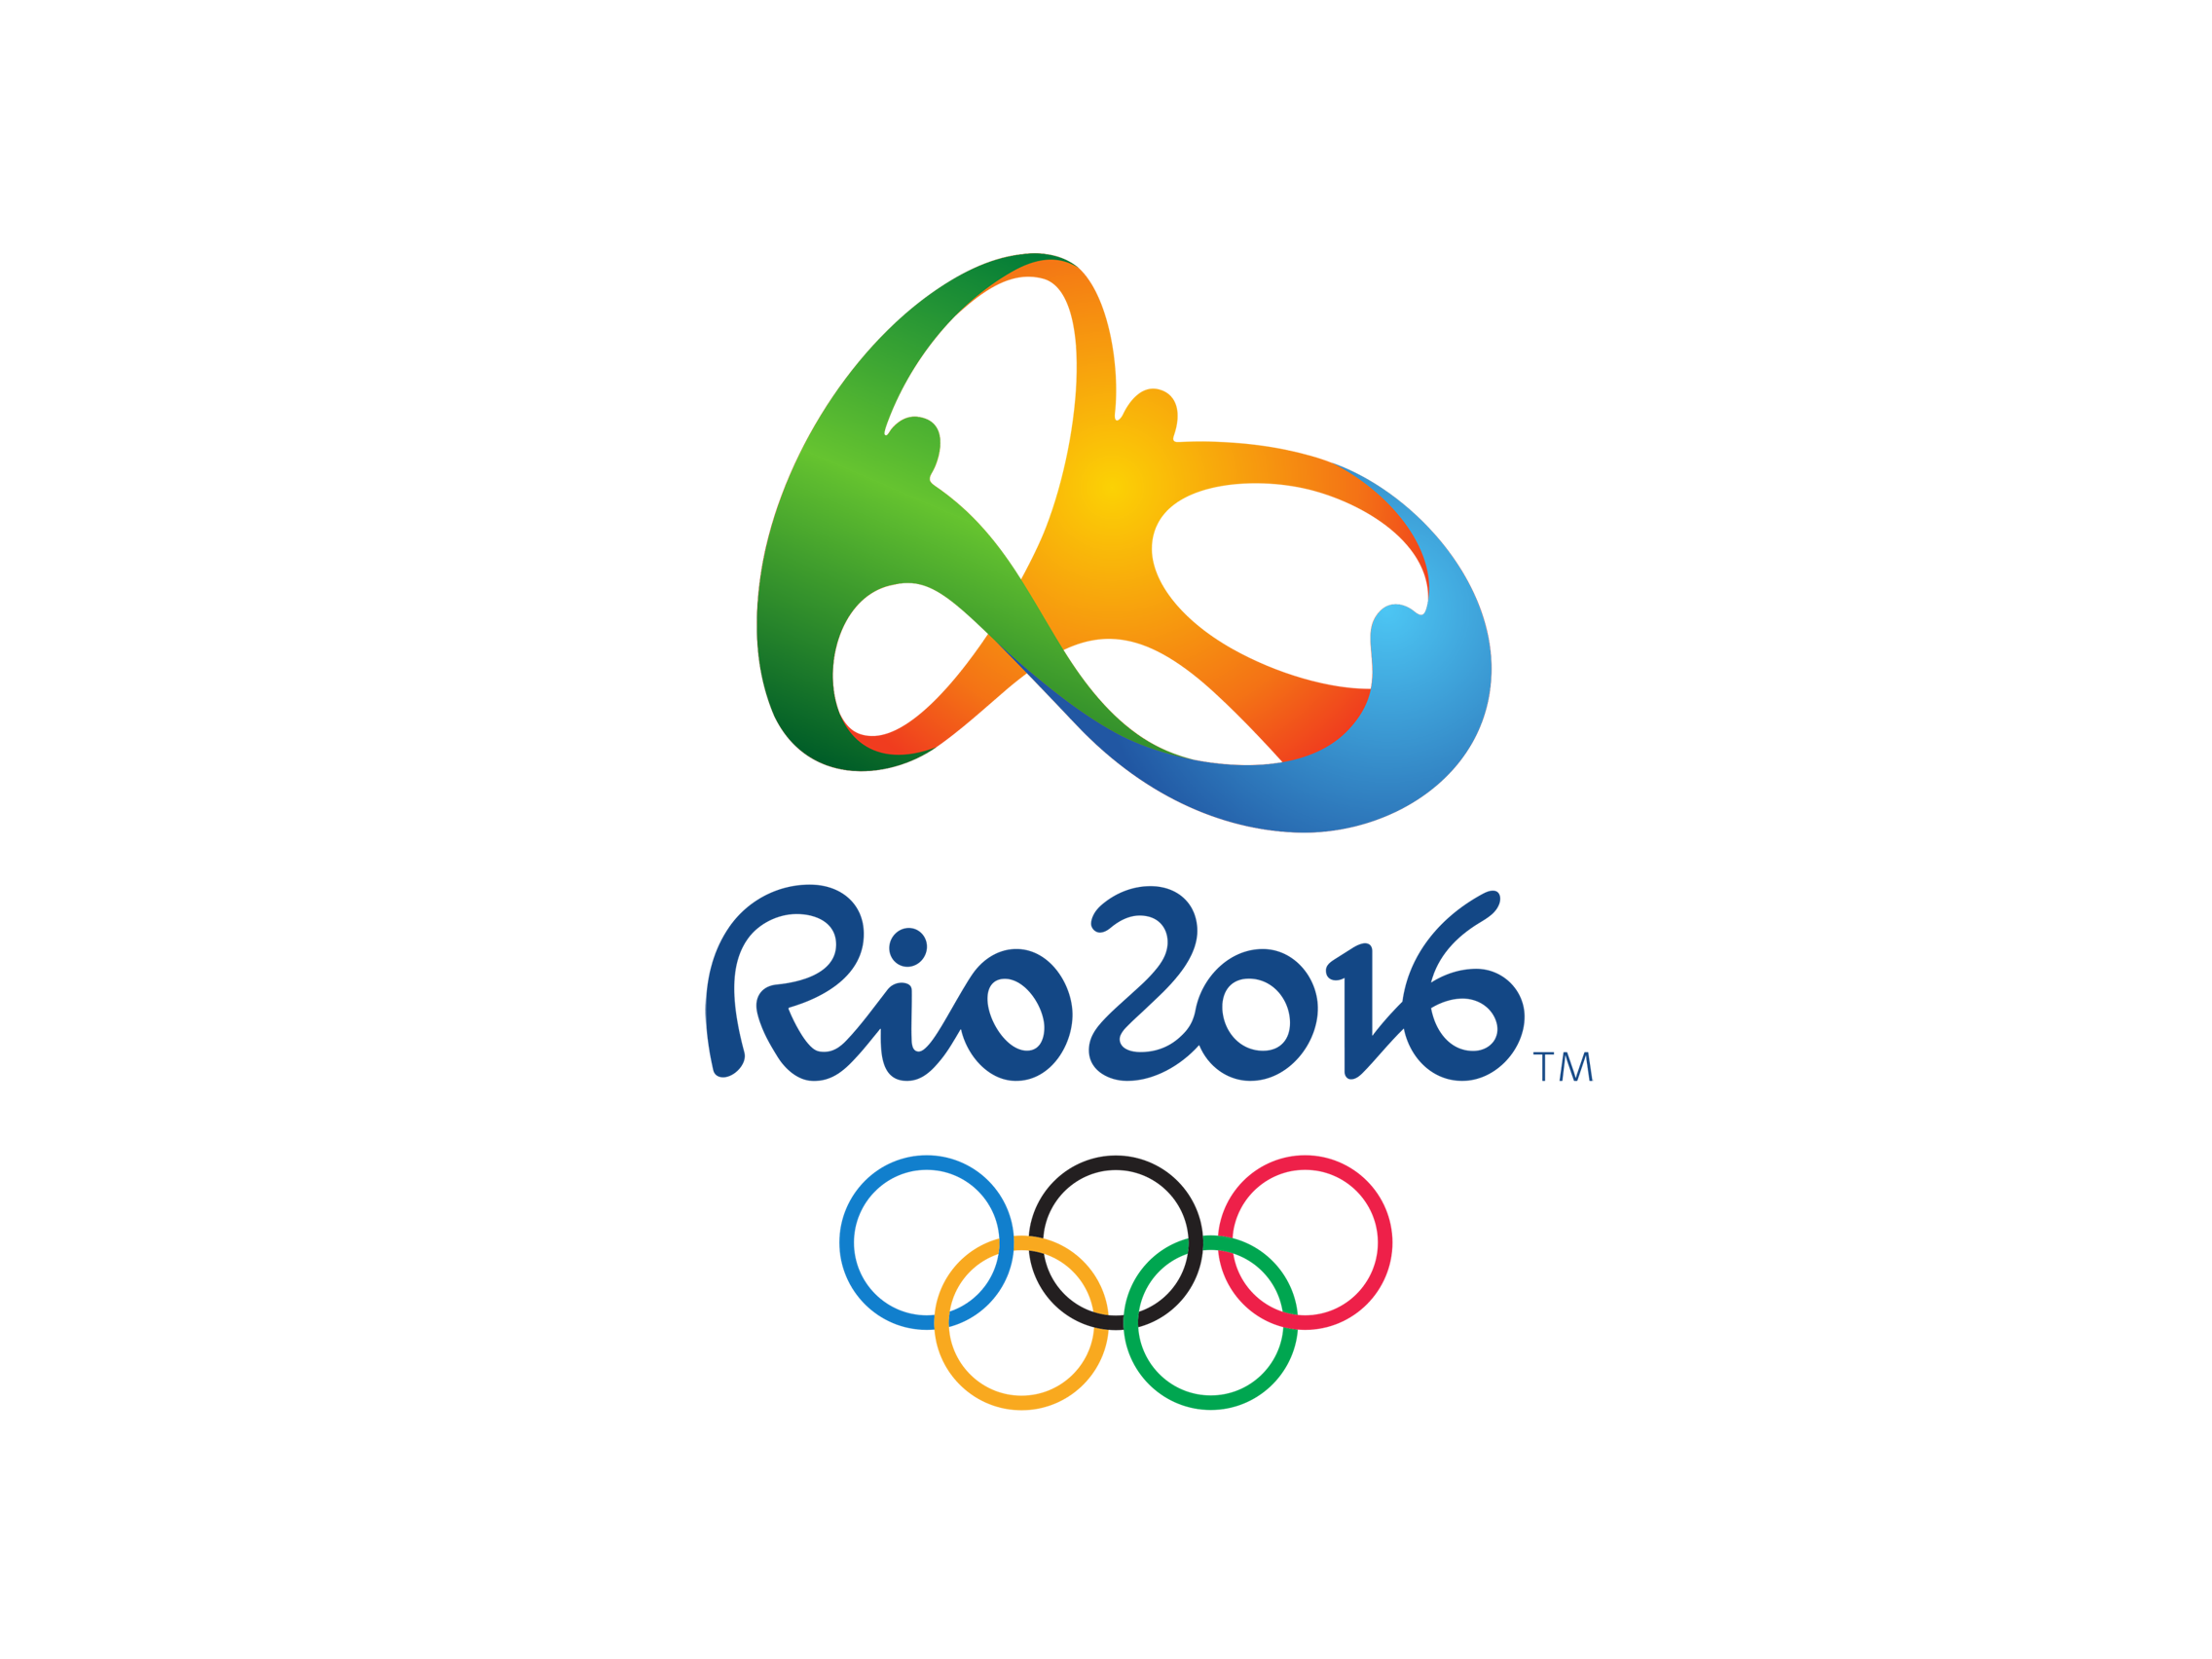 rio-2016-logo.png